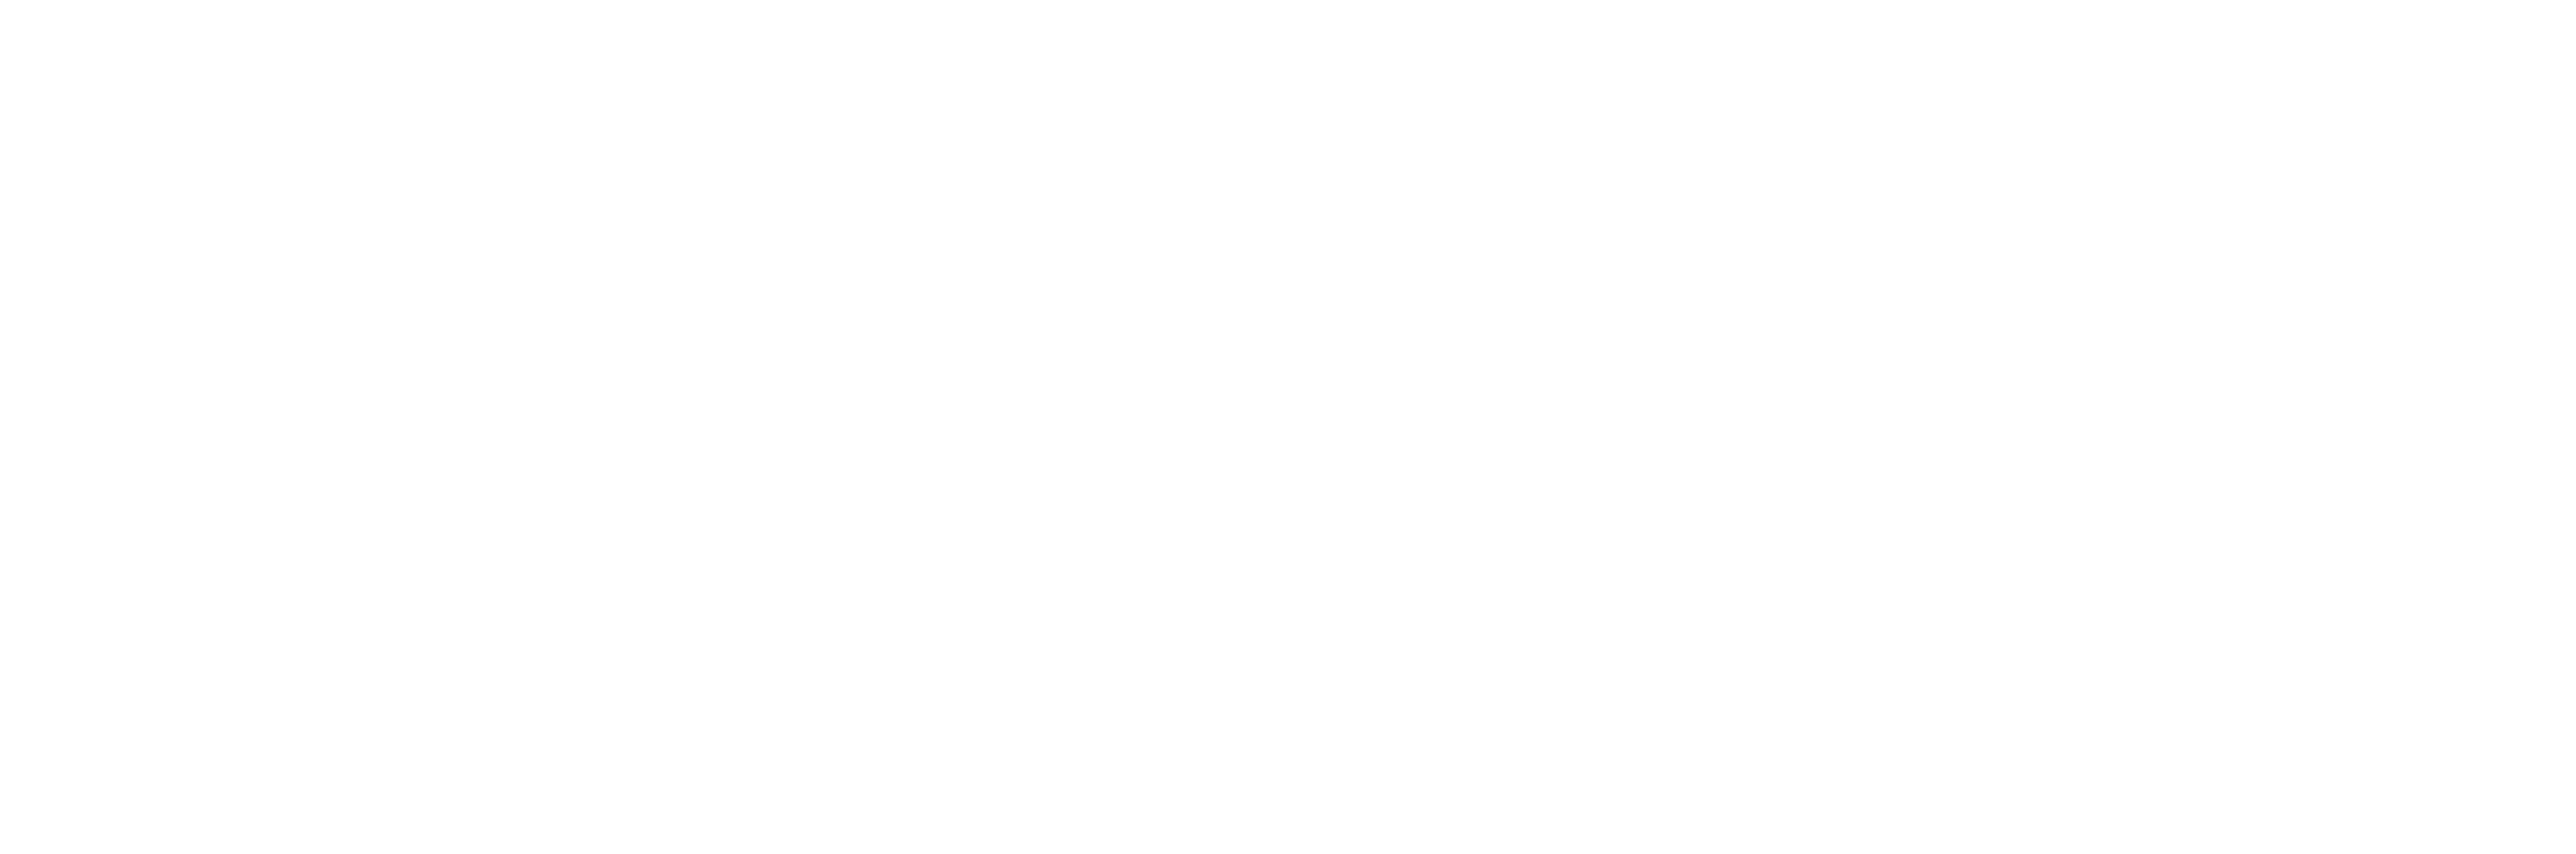 yellowcastlemallorca.com